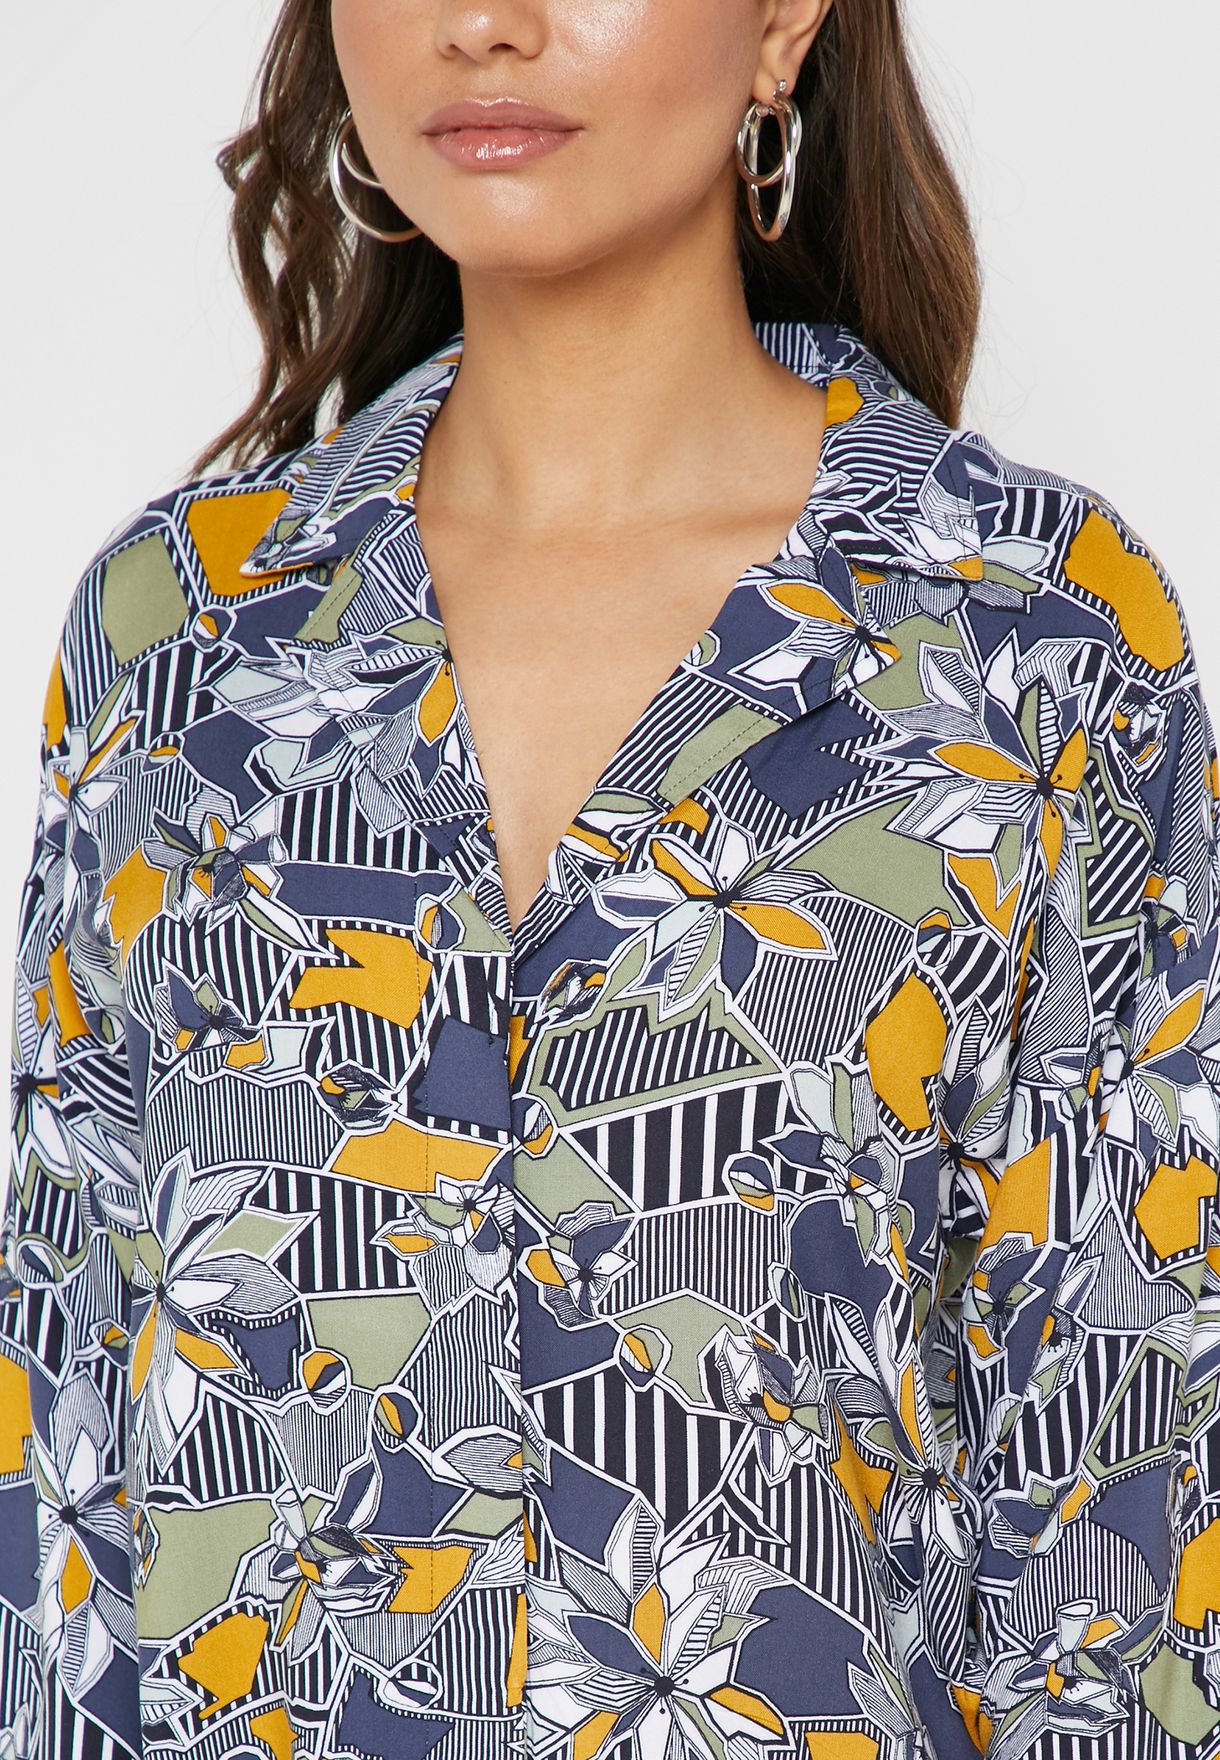 Geometric Floral Print Shirt